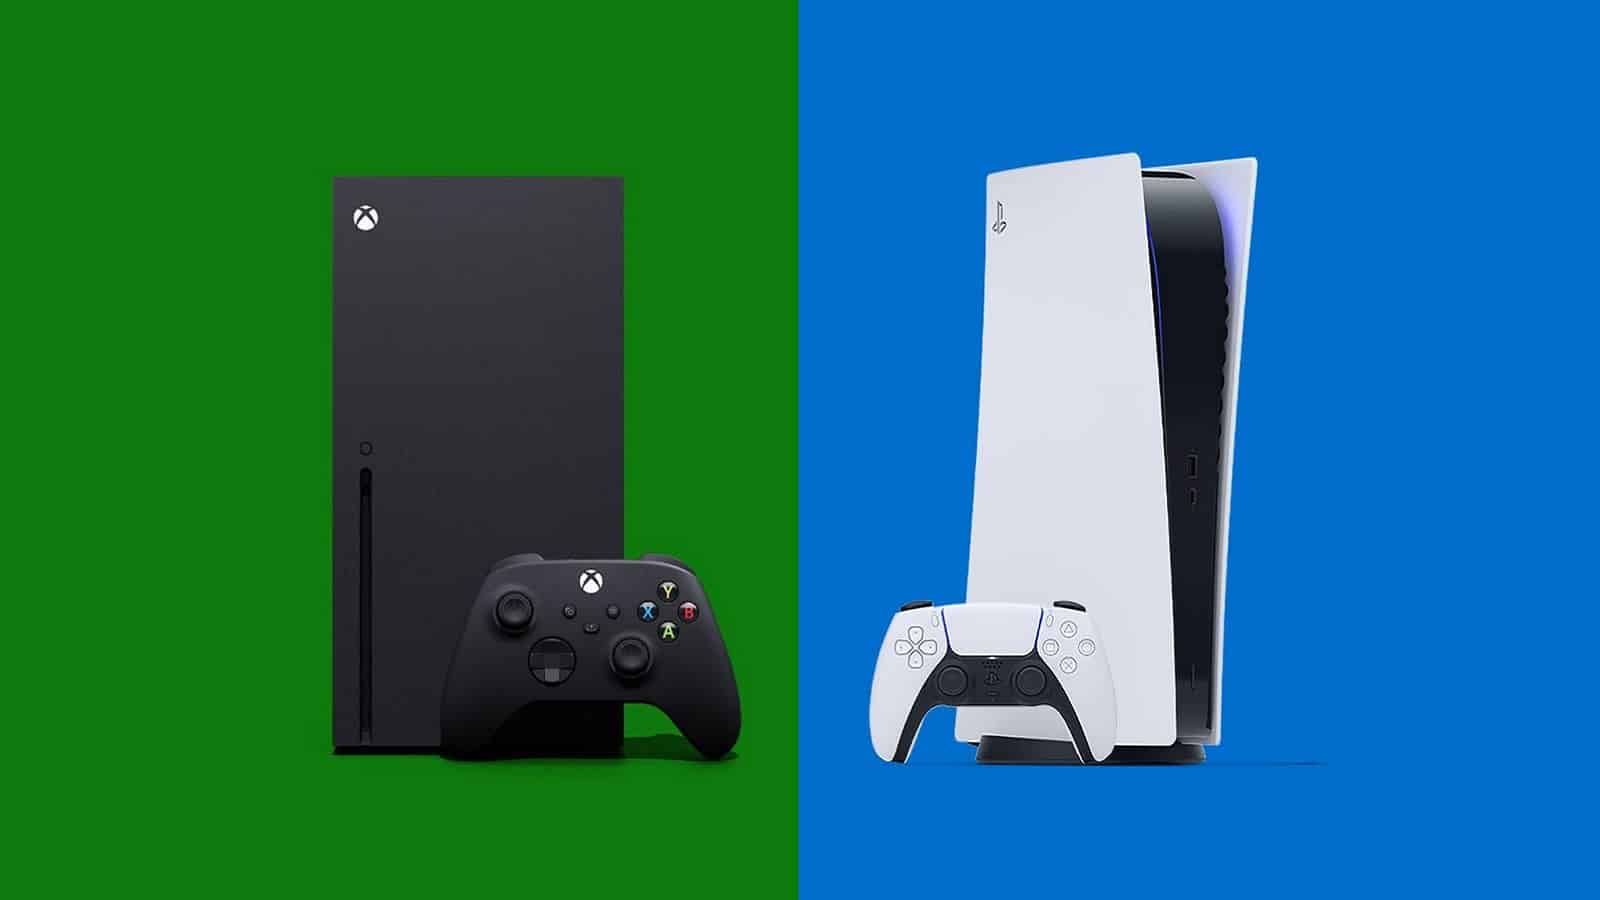 PlayStation vs Xbox